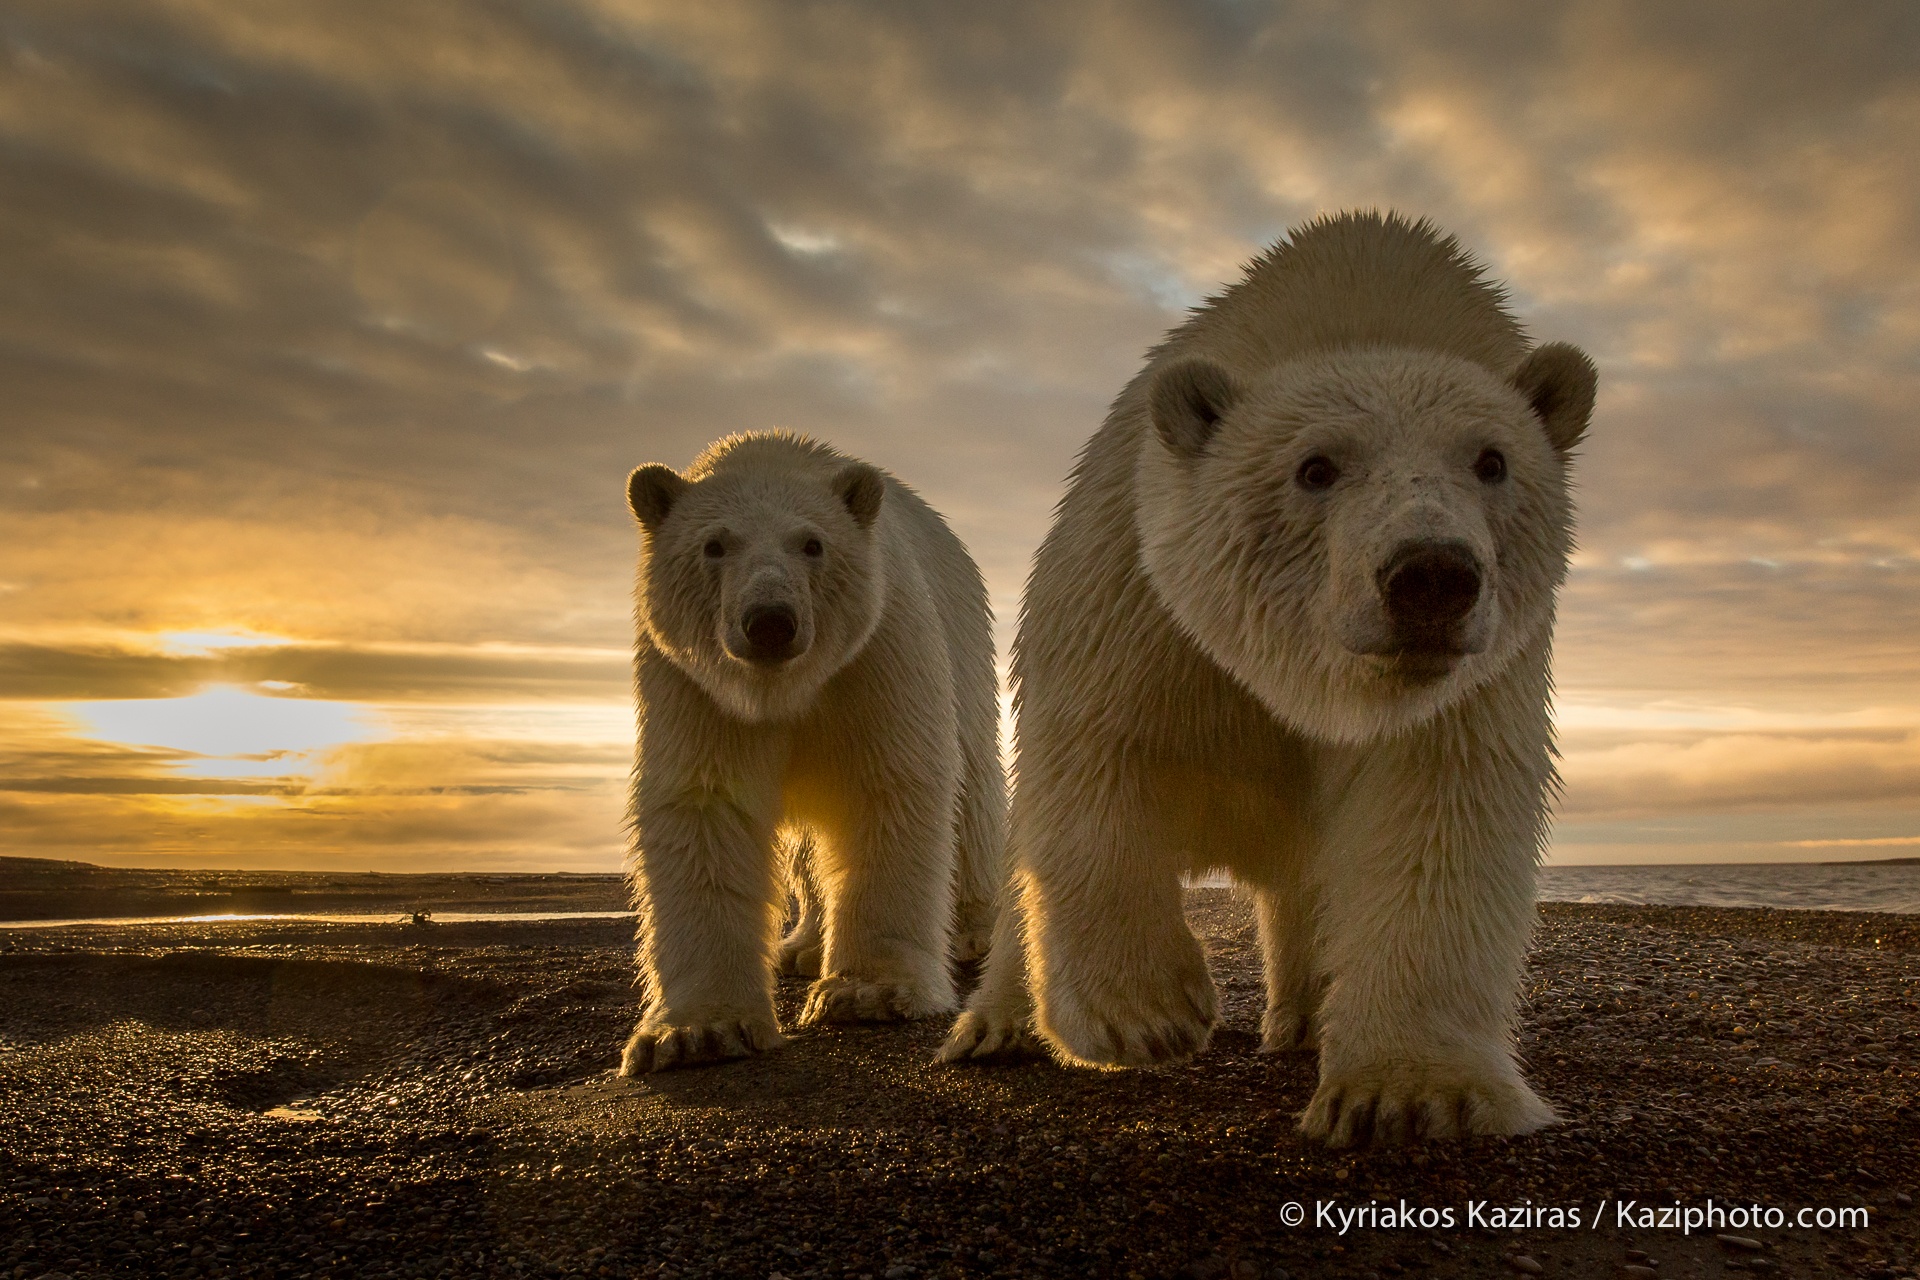 Best of 2014: Top 10 Animal Photos